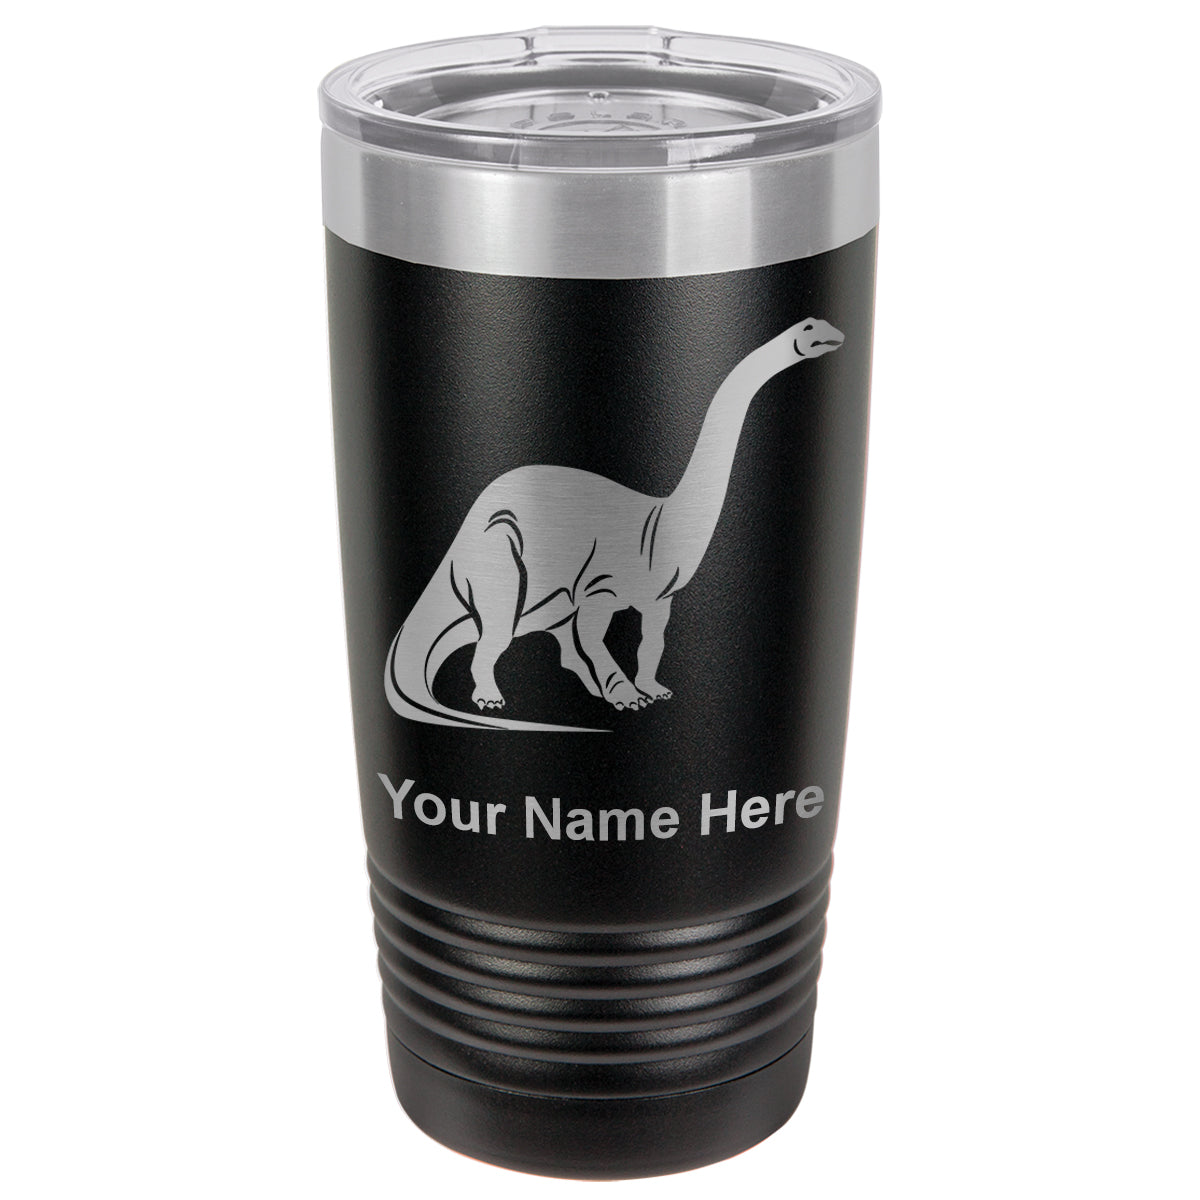 20oz Vacuum Insulated Tumbler Mug, Brontosaurus Dinosaur, Personalized Engraving Included